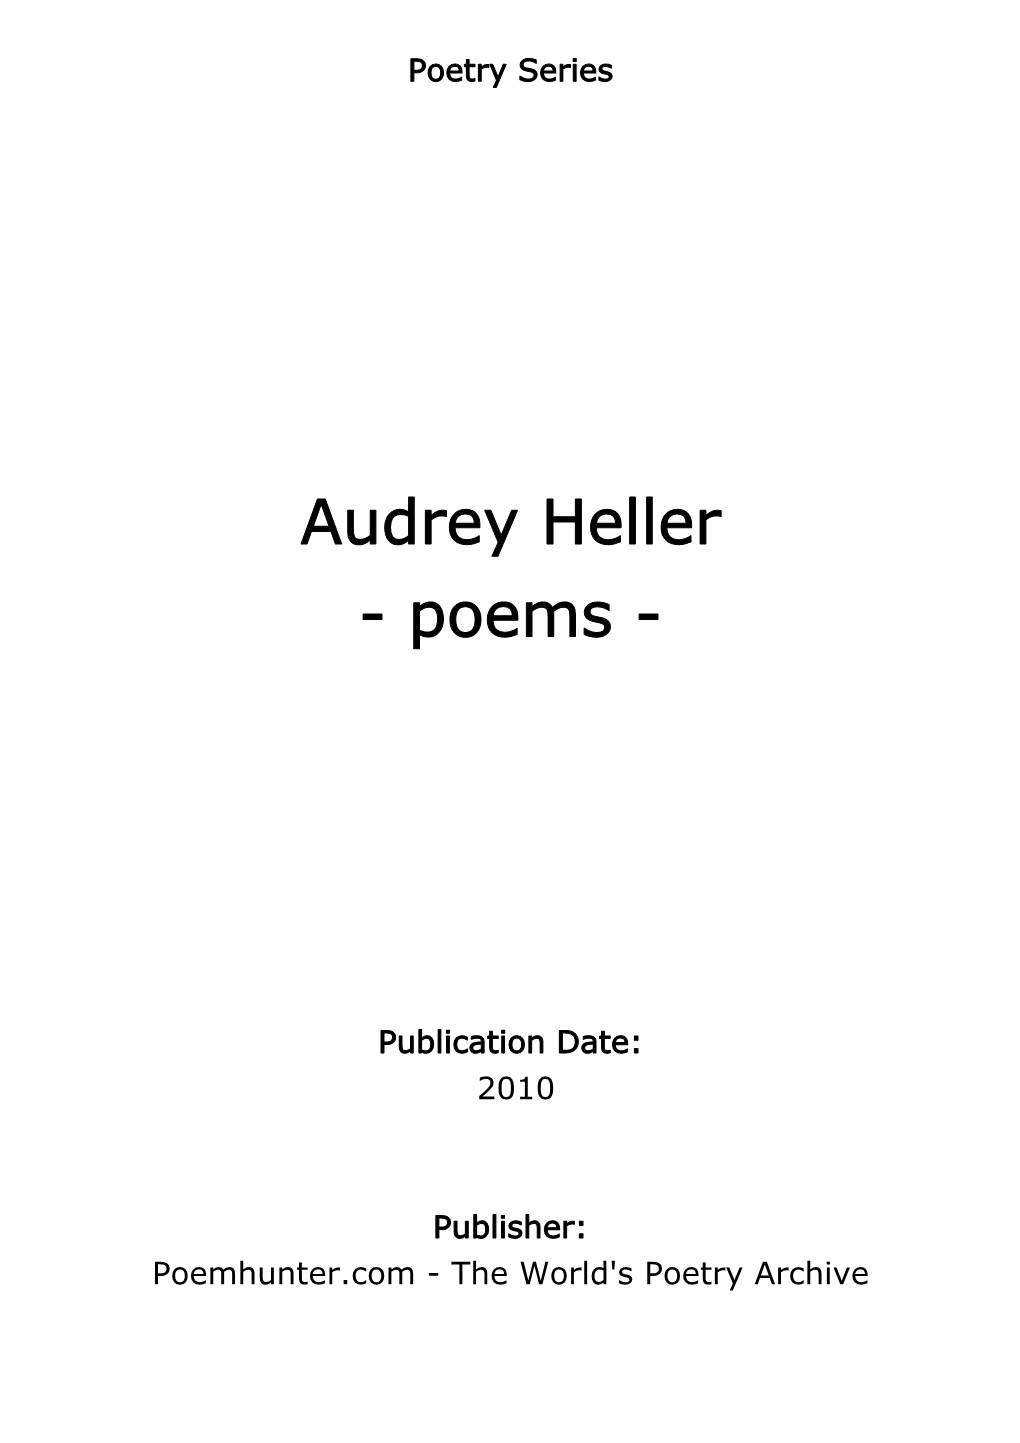 Audrey Heller - Poems